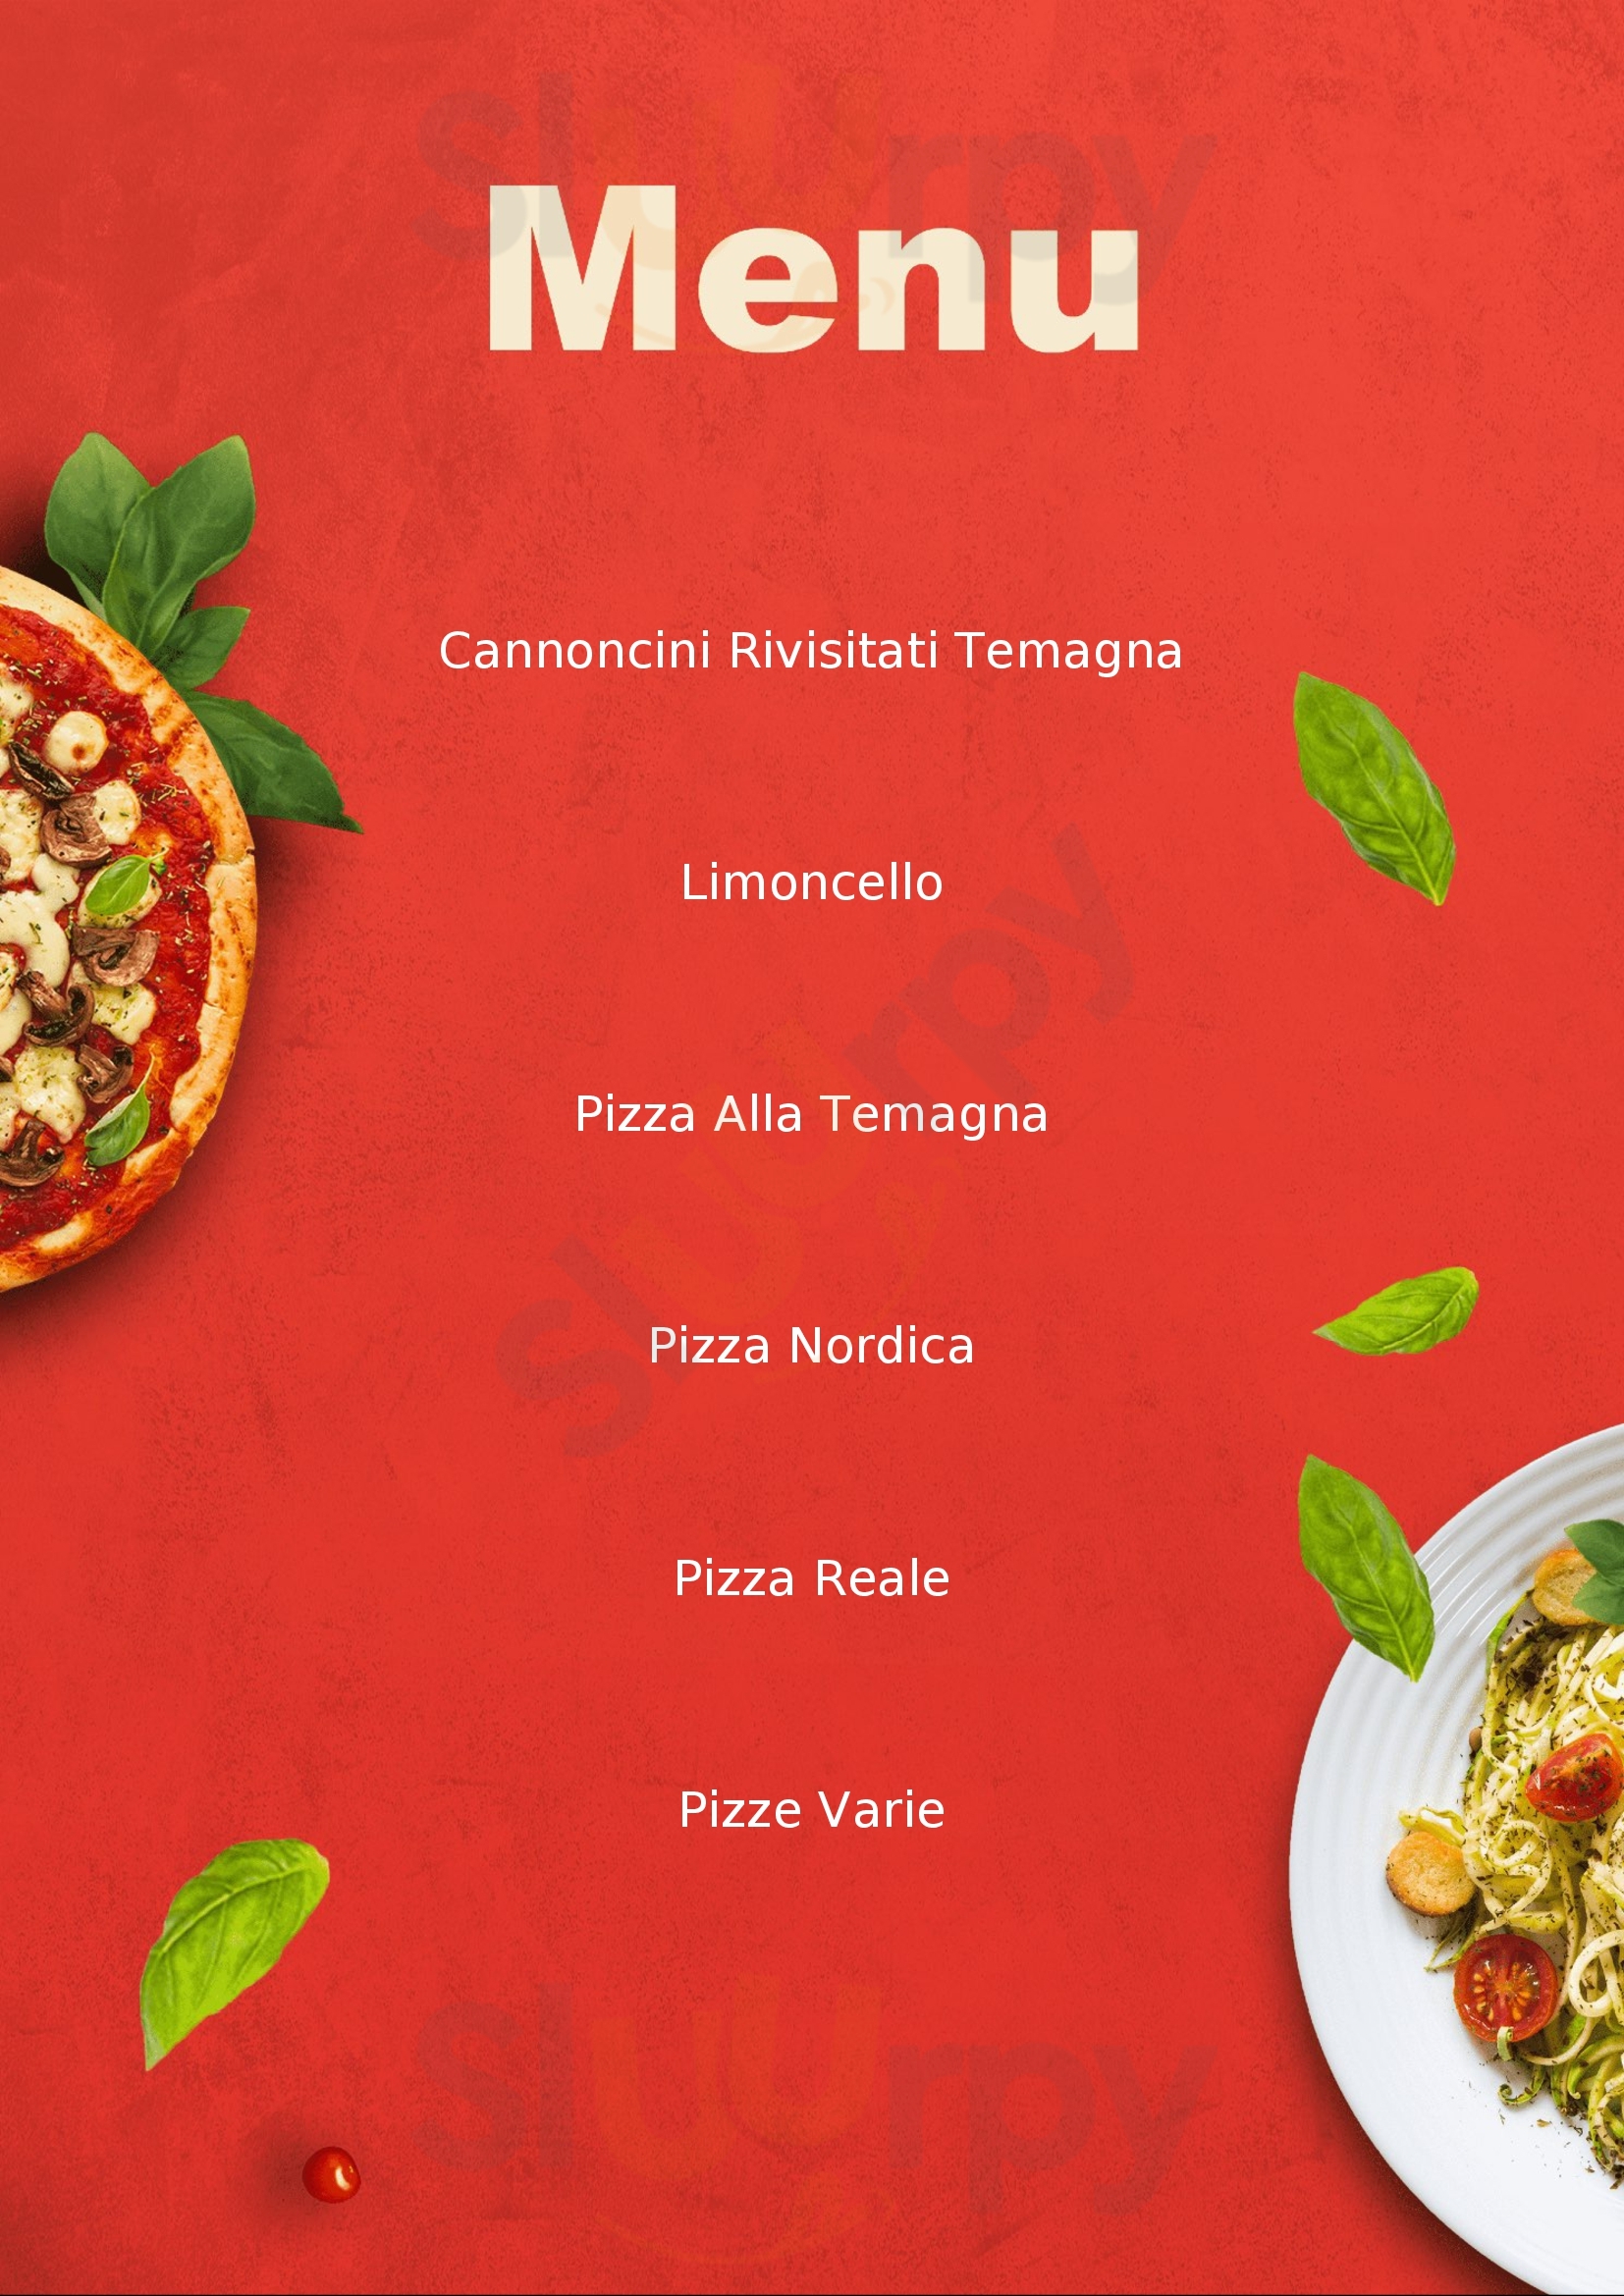 Pizzeria Temagna San Nicandro Garganico menù 1 pagina